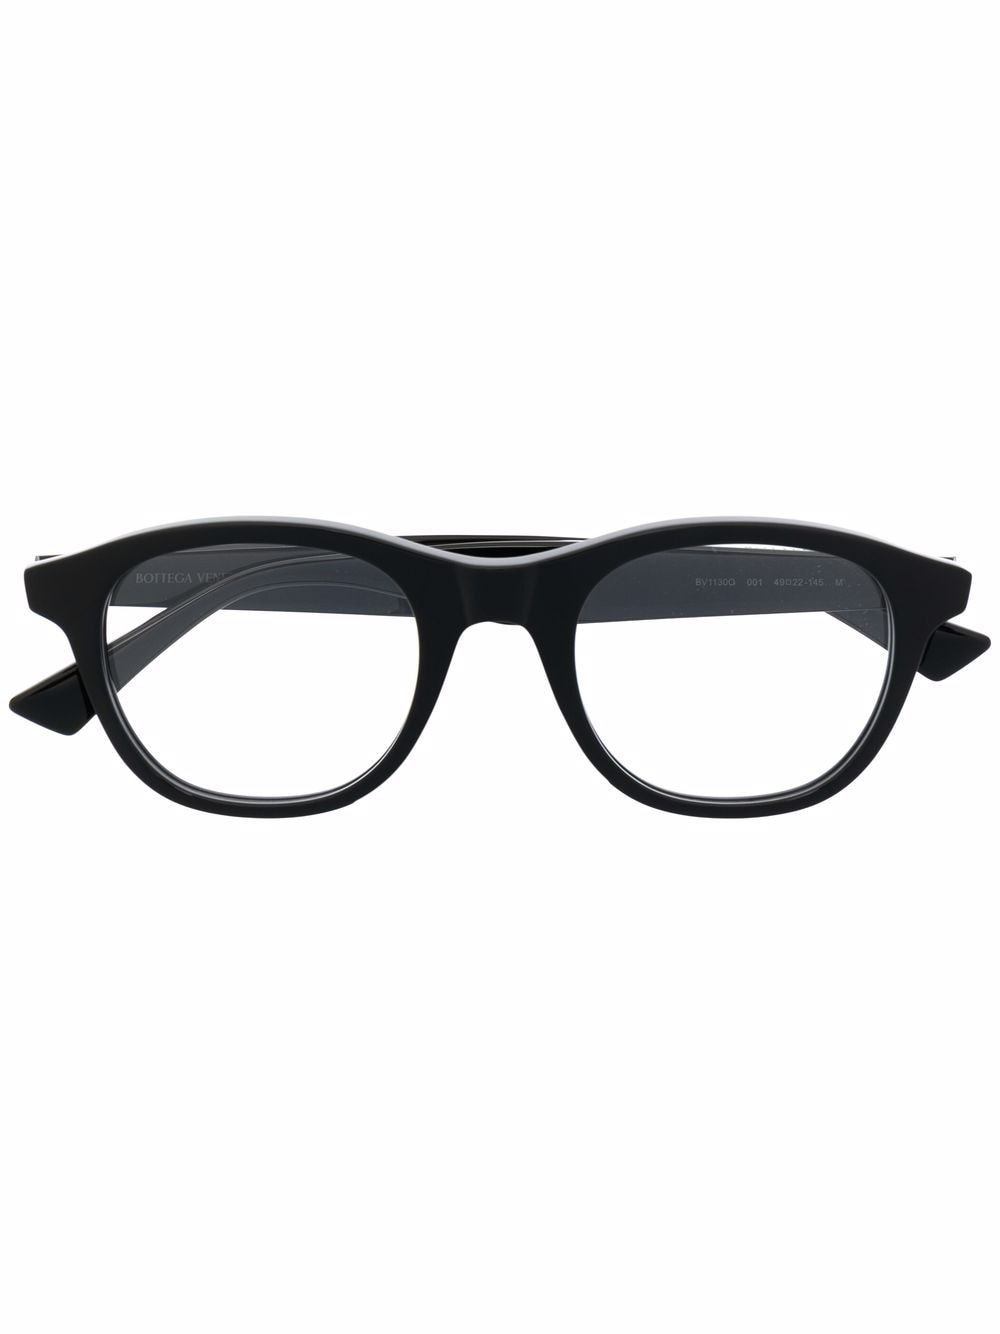 фото Bottega veneta eyewear очки в круглой оправе